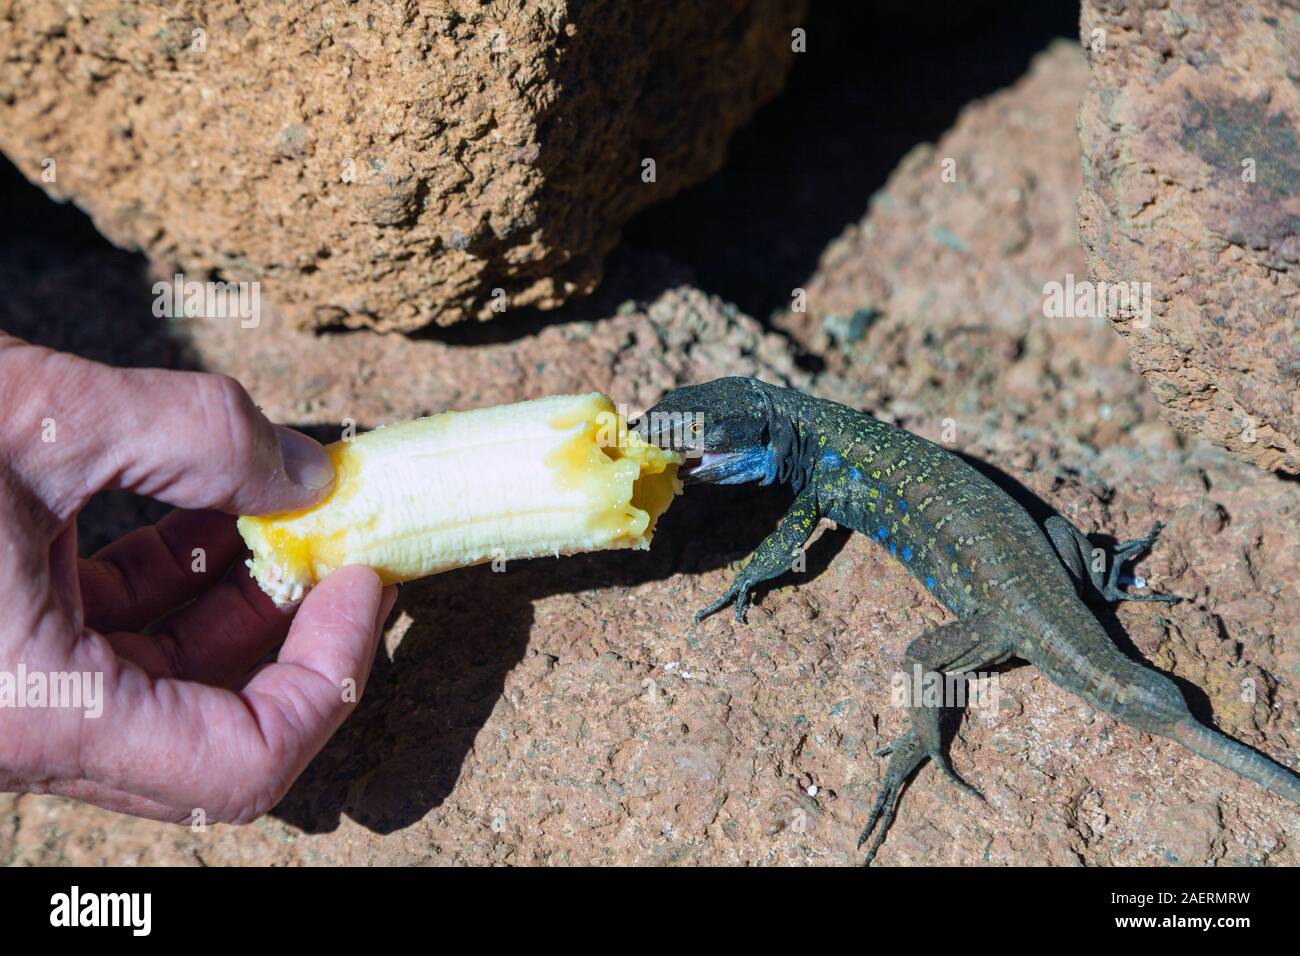 Tenerife Lizard being hand fed a banana. Stock Photo